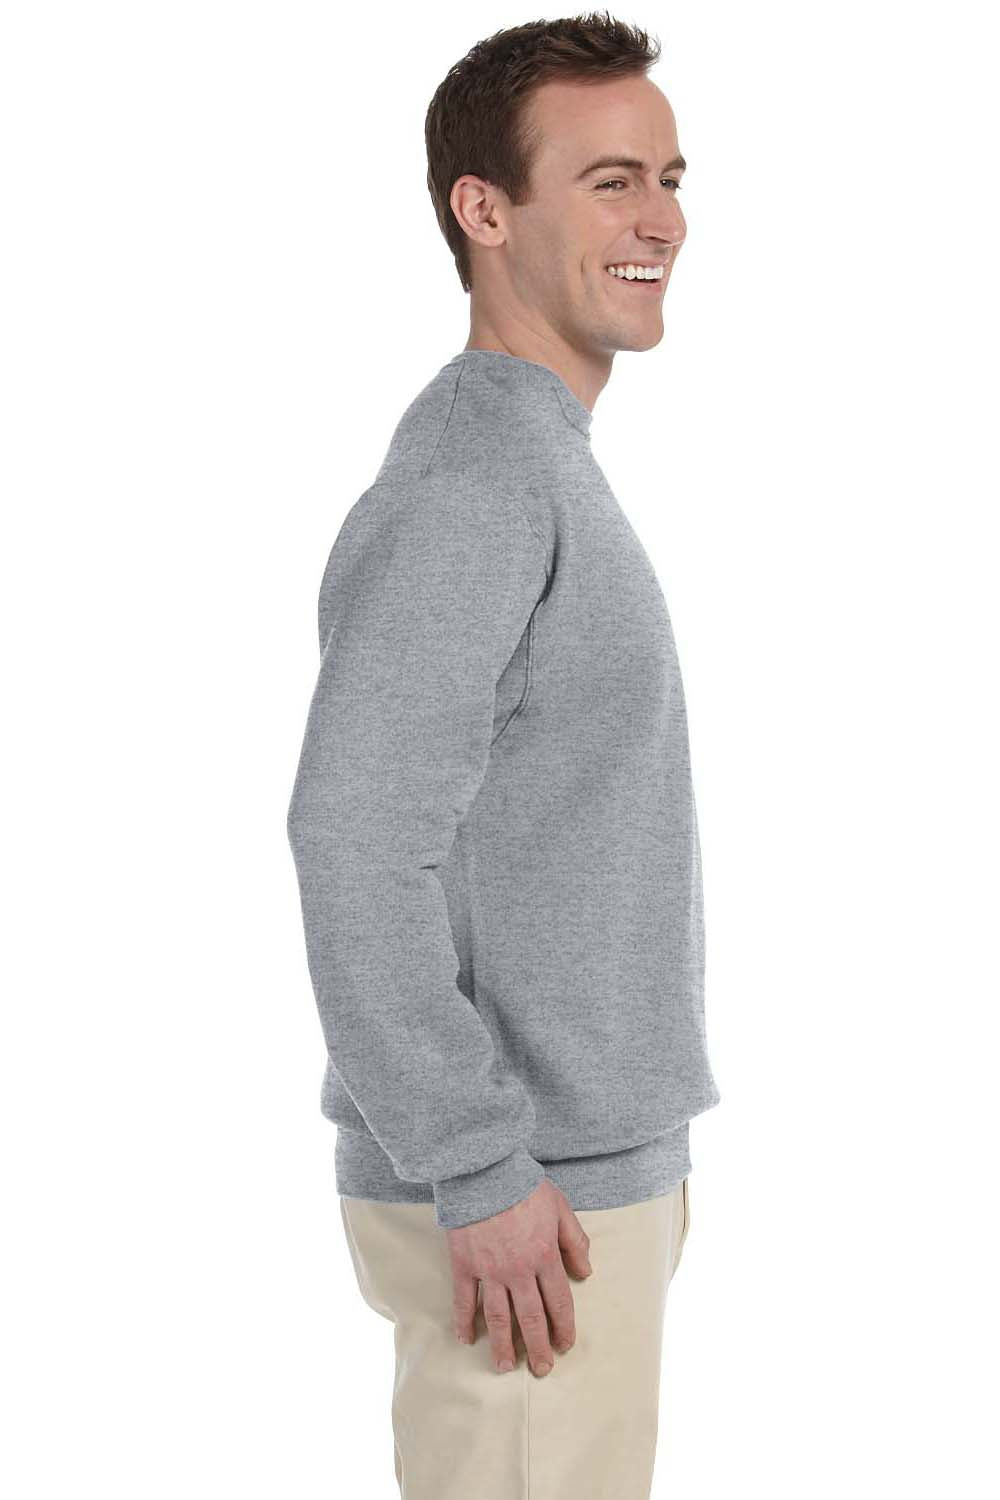 Jerzees 562 Mens NuBlend Fleece Crewneck Sweatshirt Oxford Grey Side